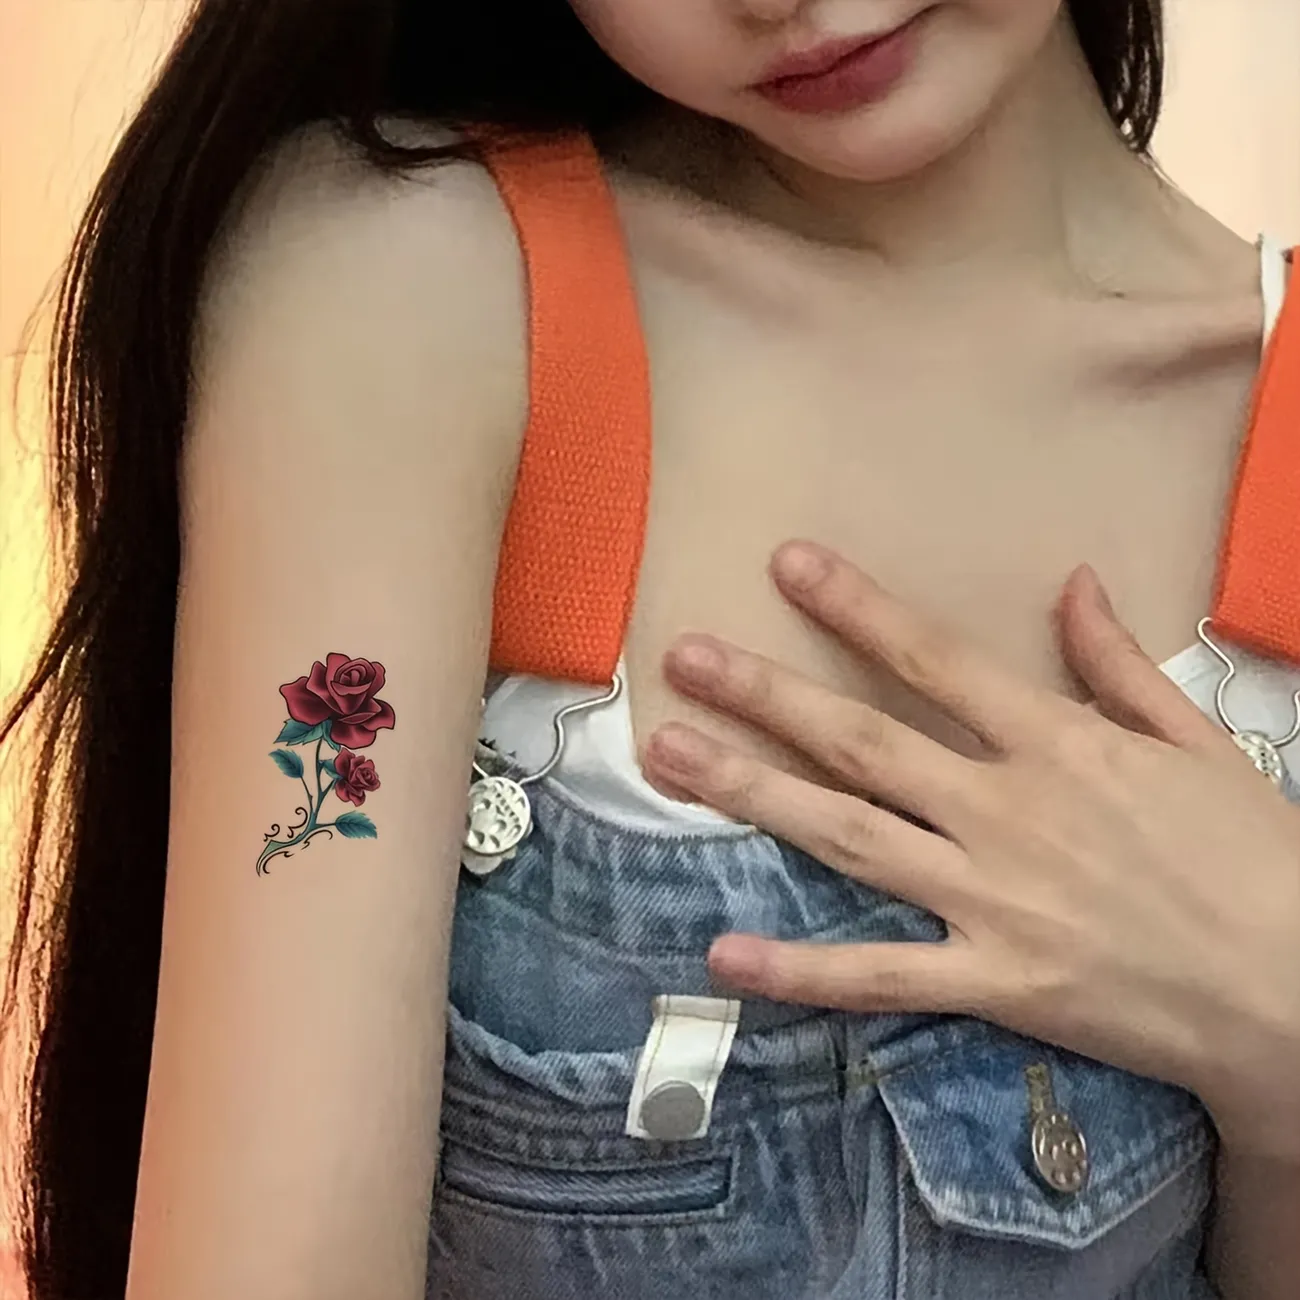 Ice Crystal Rose Tattoos Stickers Romantic Flower Shoulder Waist Arm Temporary Tattoos Lasting 1 3 Days